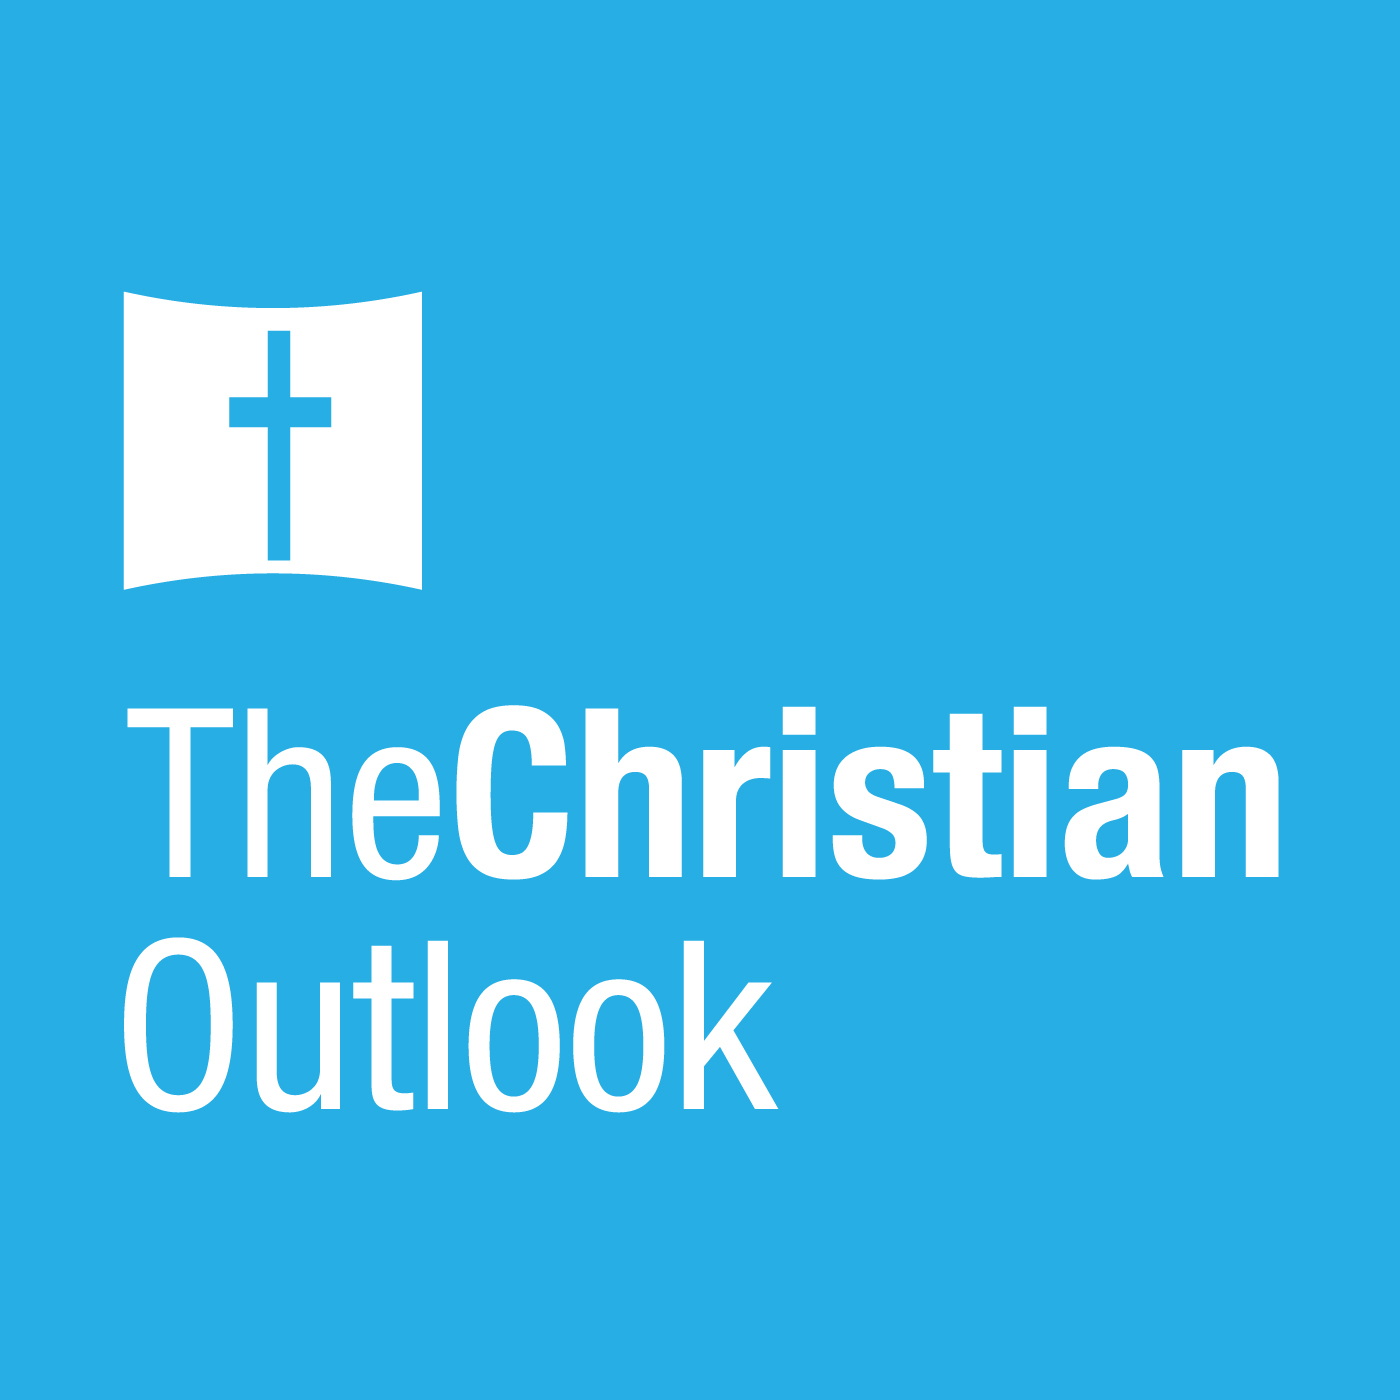 TCO 2/18/17: A Christian Response to Civilizational Decline